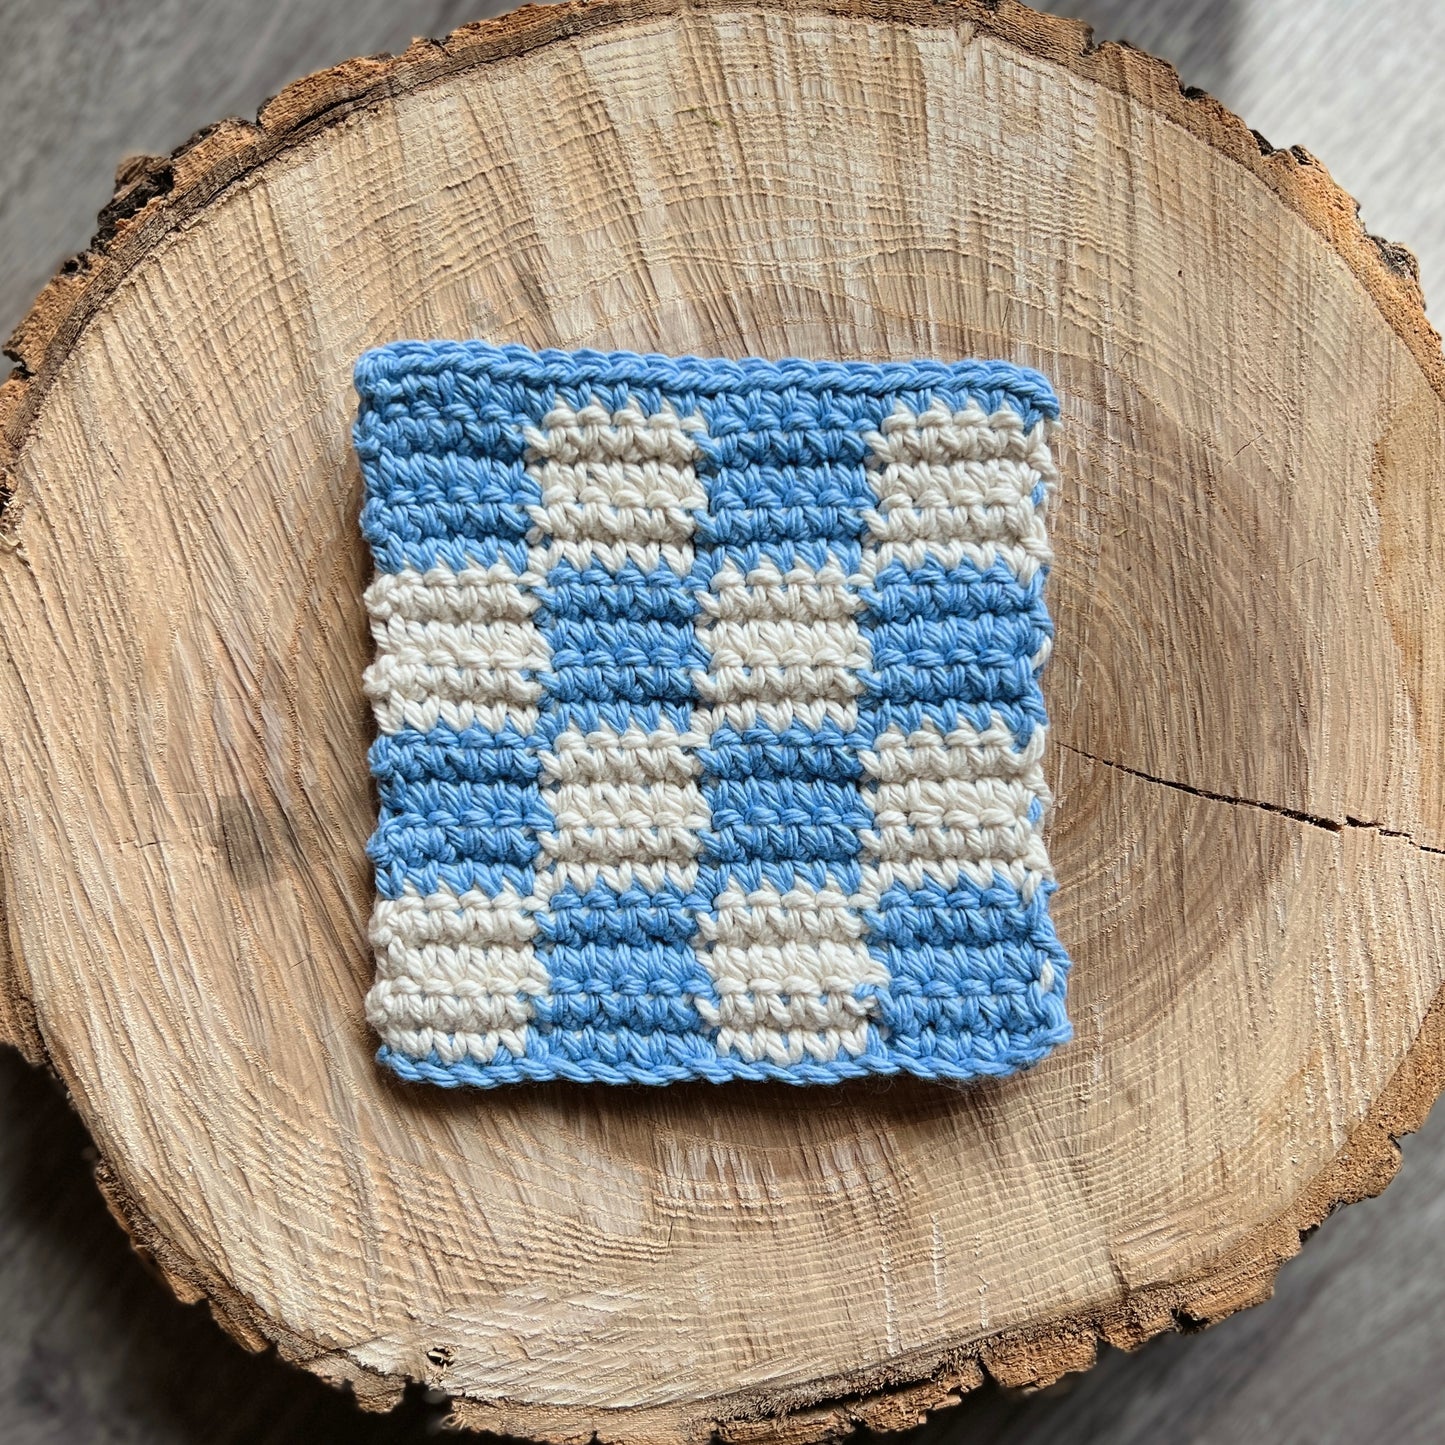 XL Check Crochet Coaster (multiple colors)